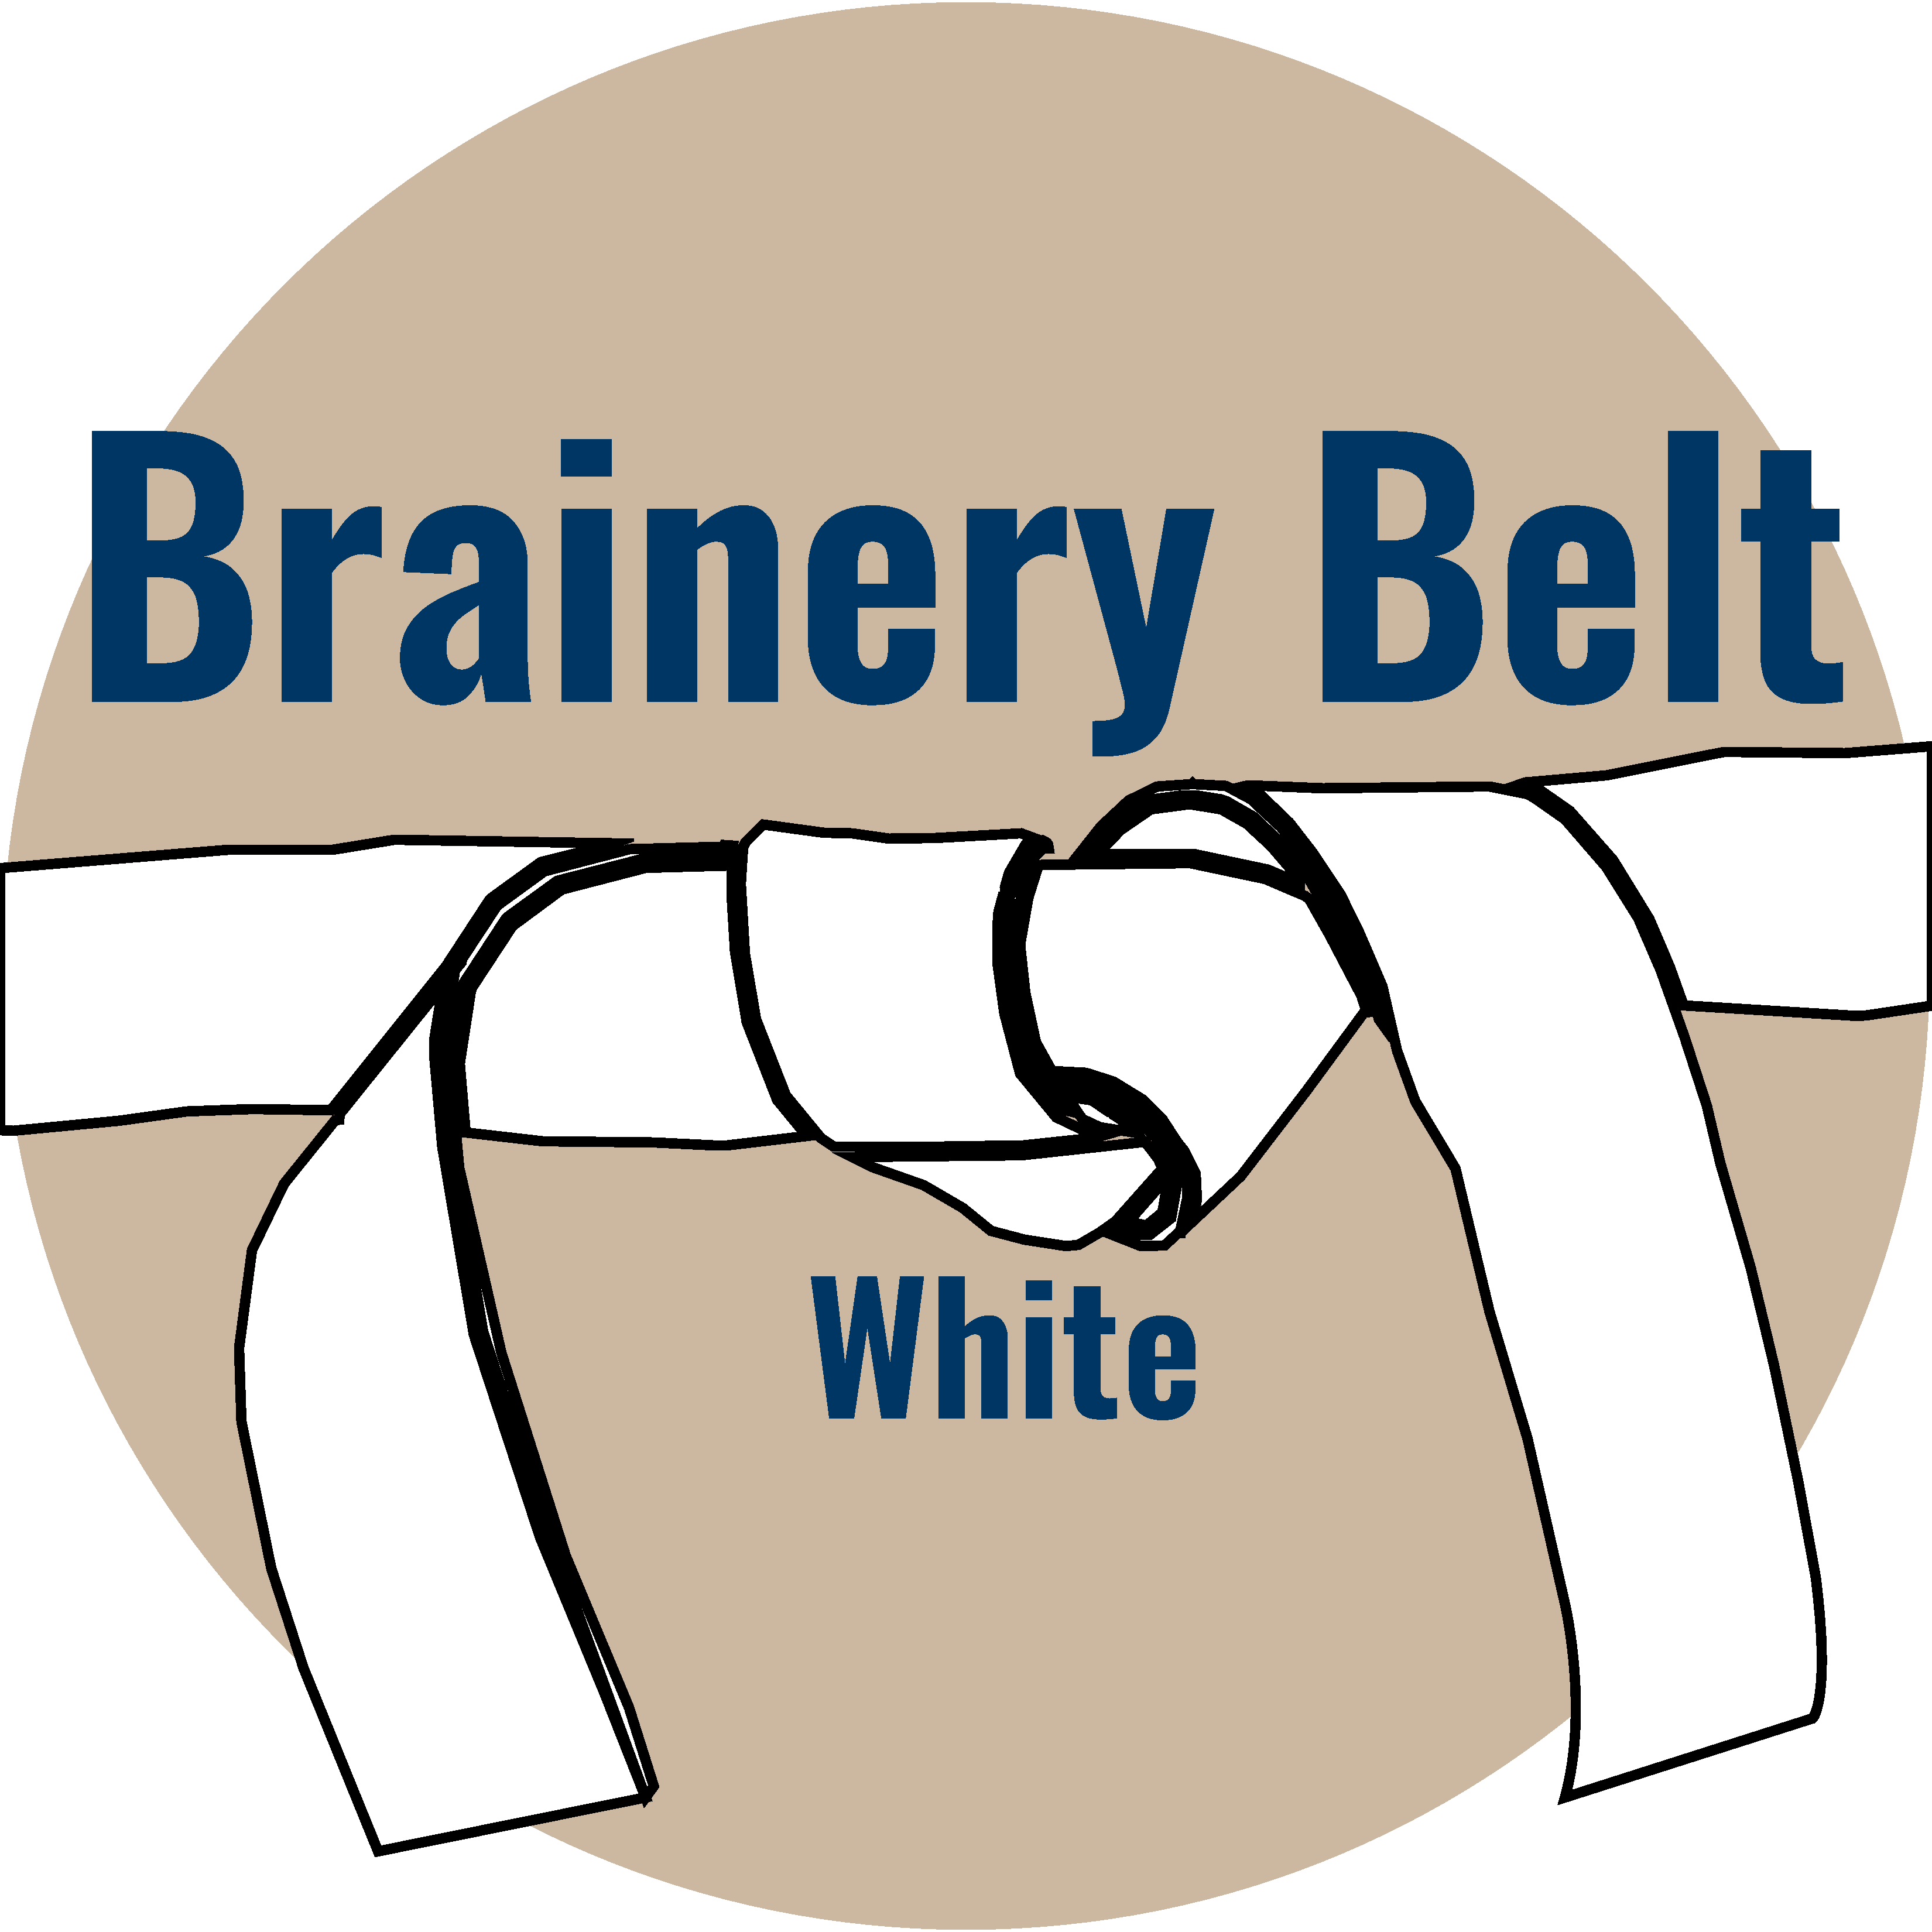 UC2 Brainery White Belt Rank